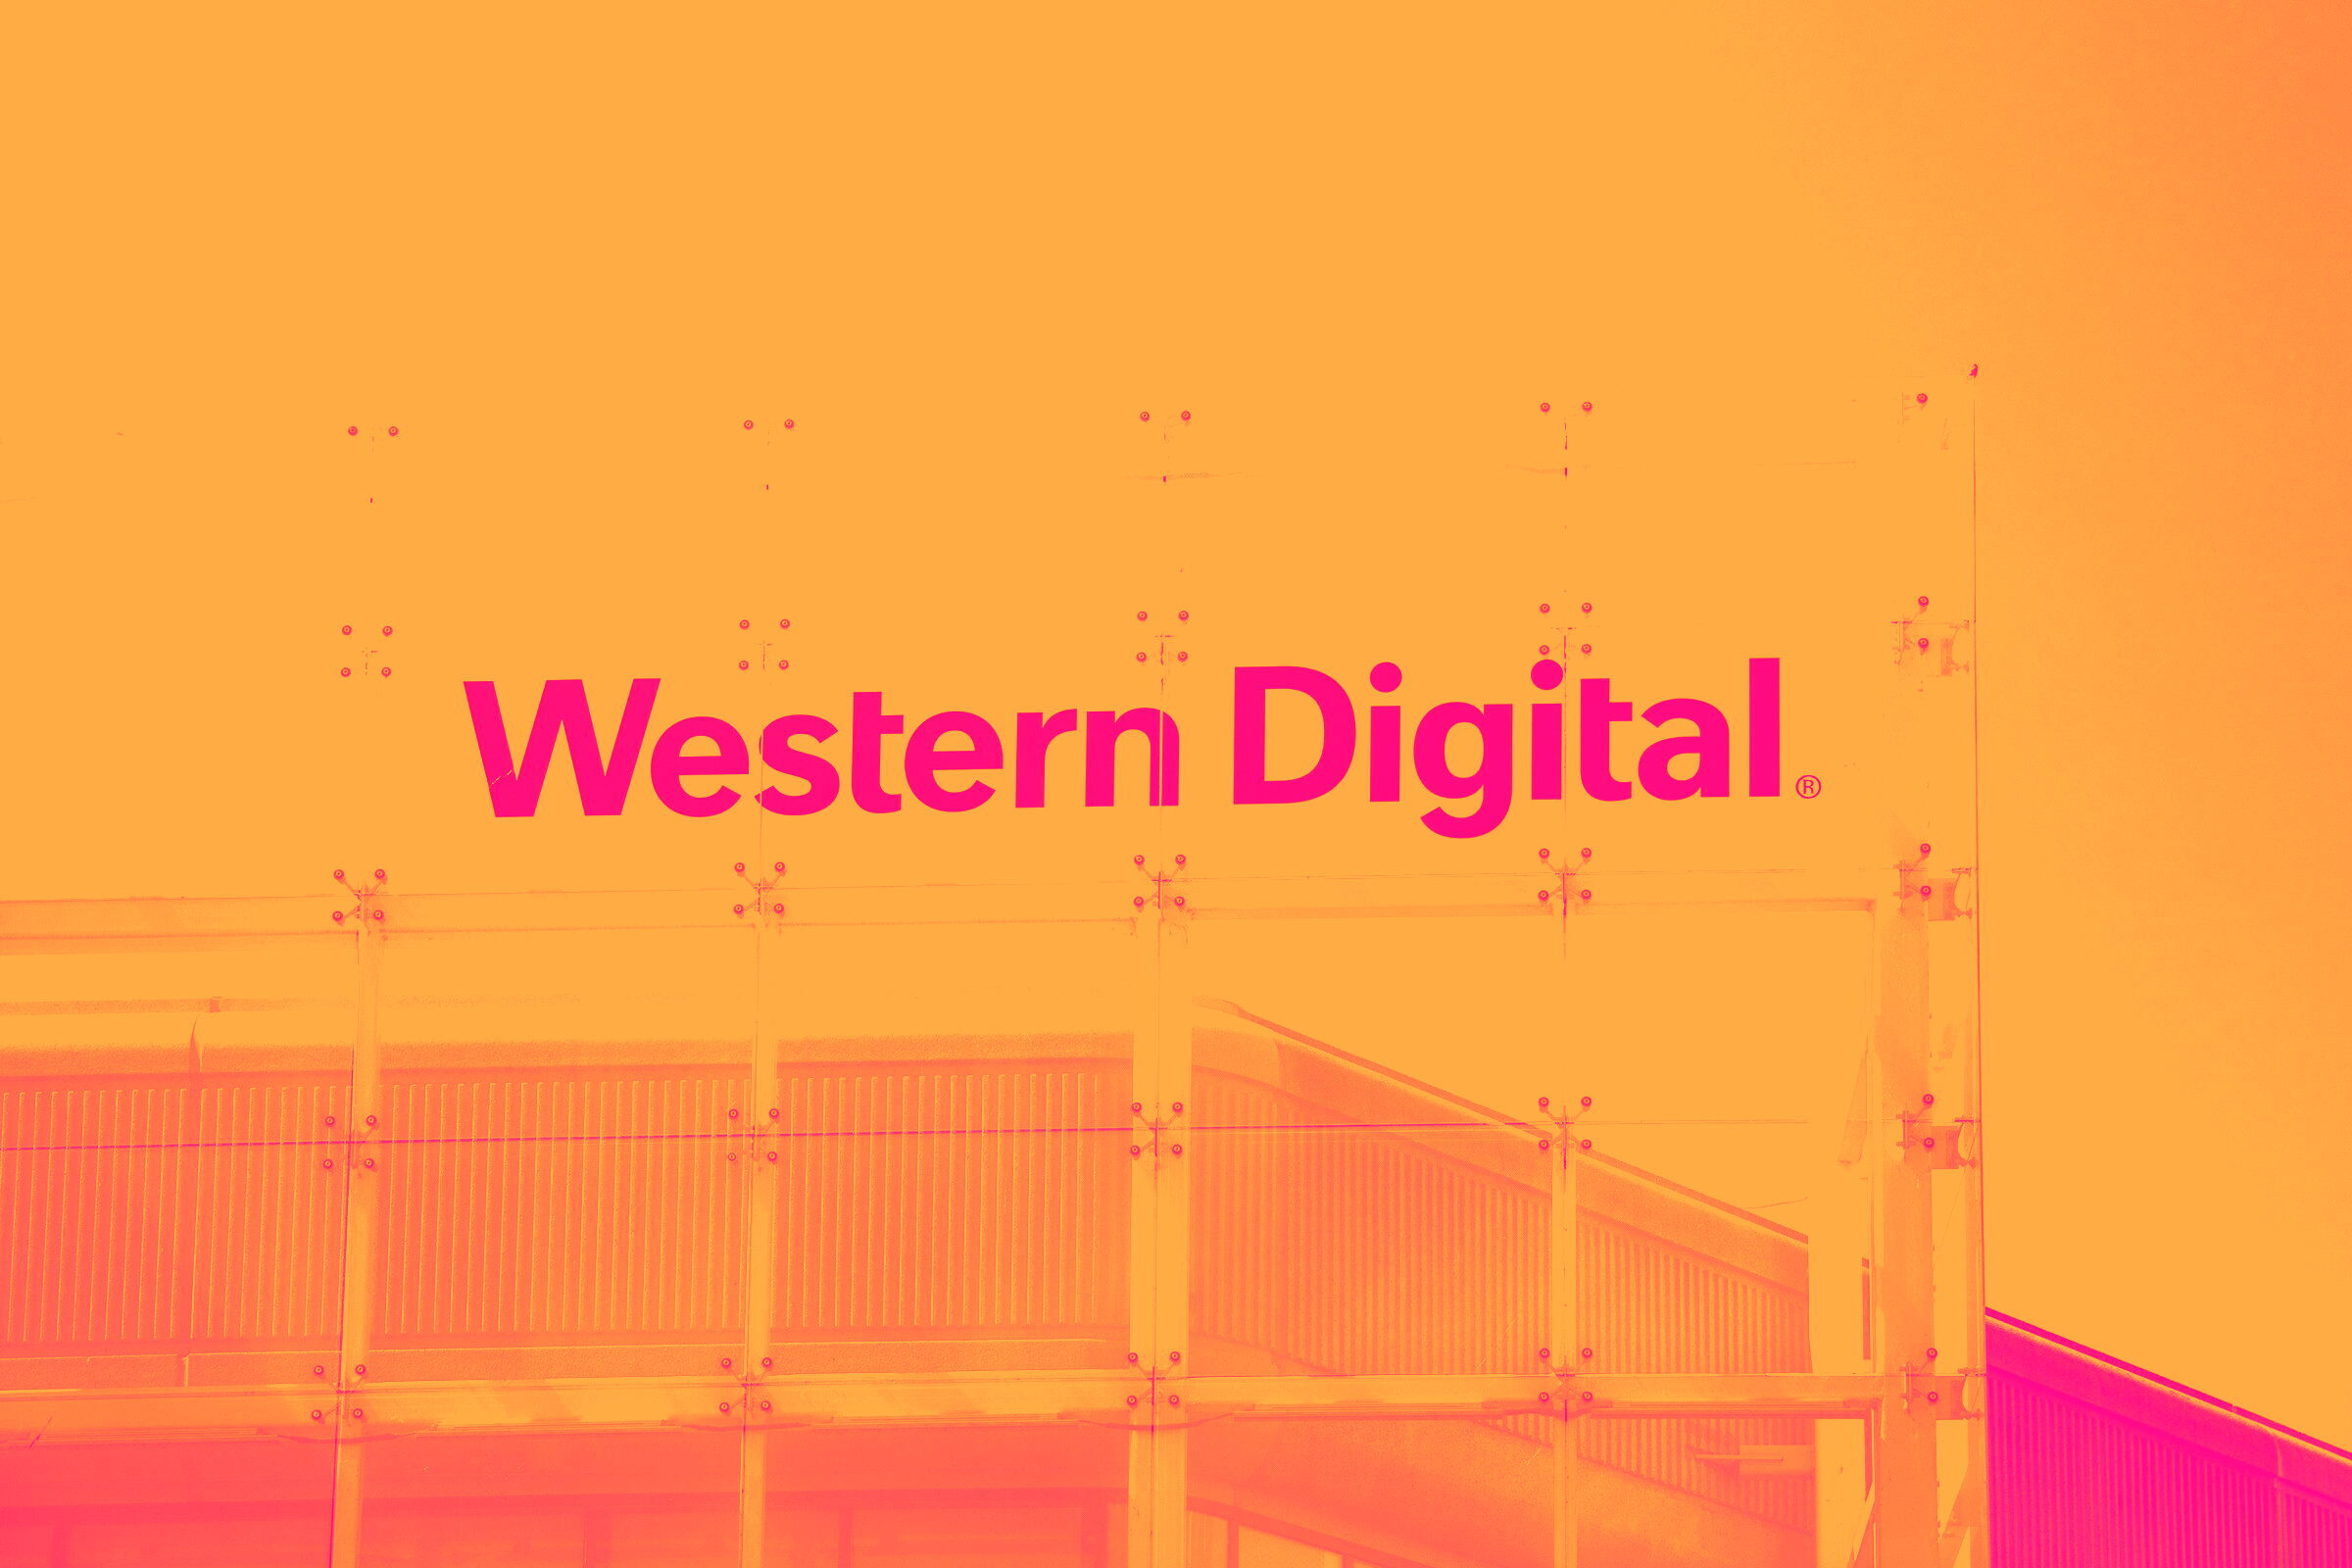 Western digital corporation cover image 46 Xa7hwv